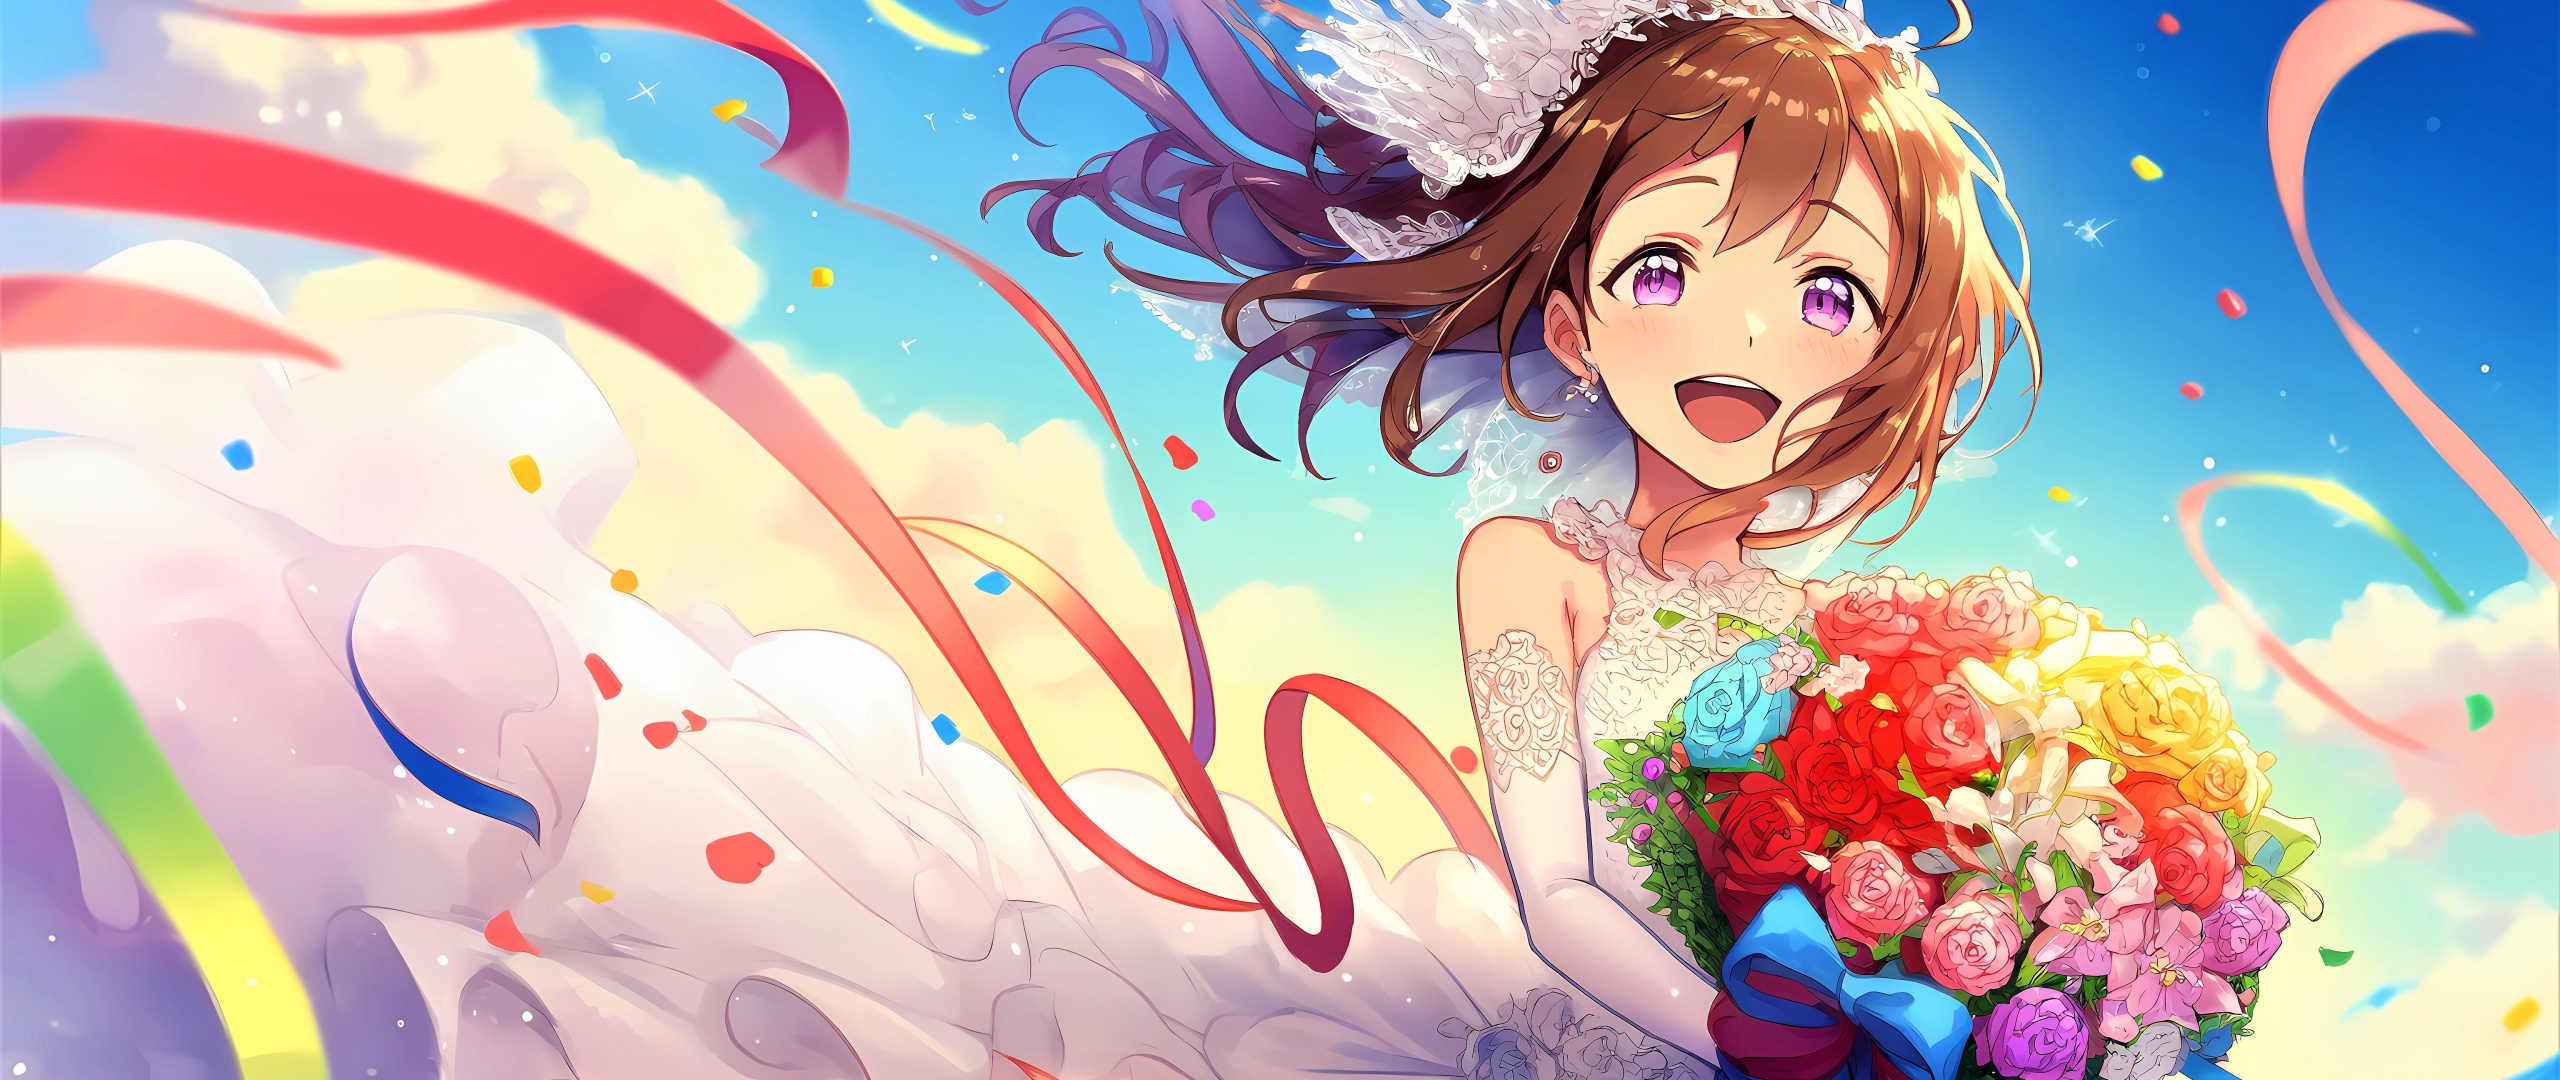 Anime Anime Girls Wallpaper - Resolution:2560x1080 - ID:1394670 - wallha.com